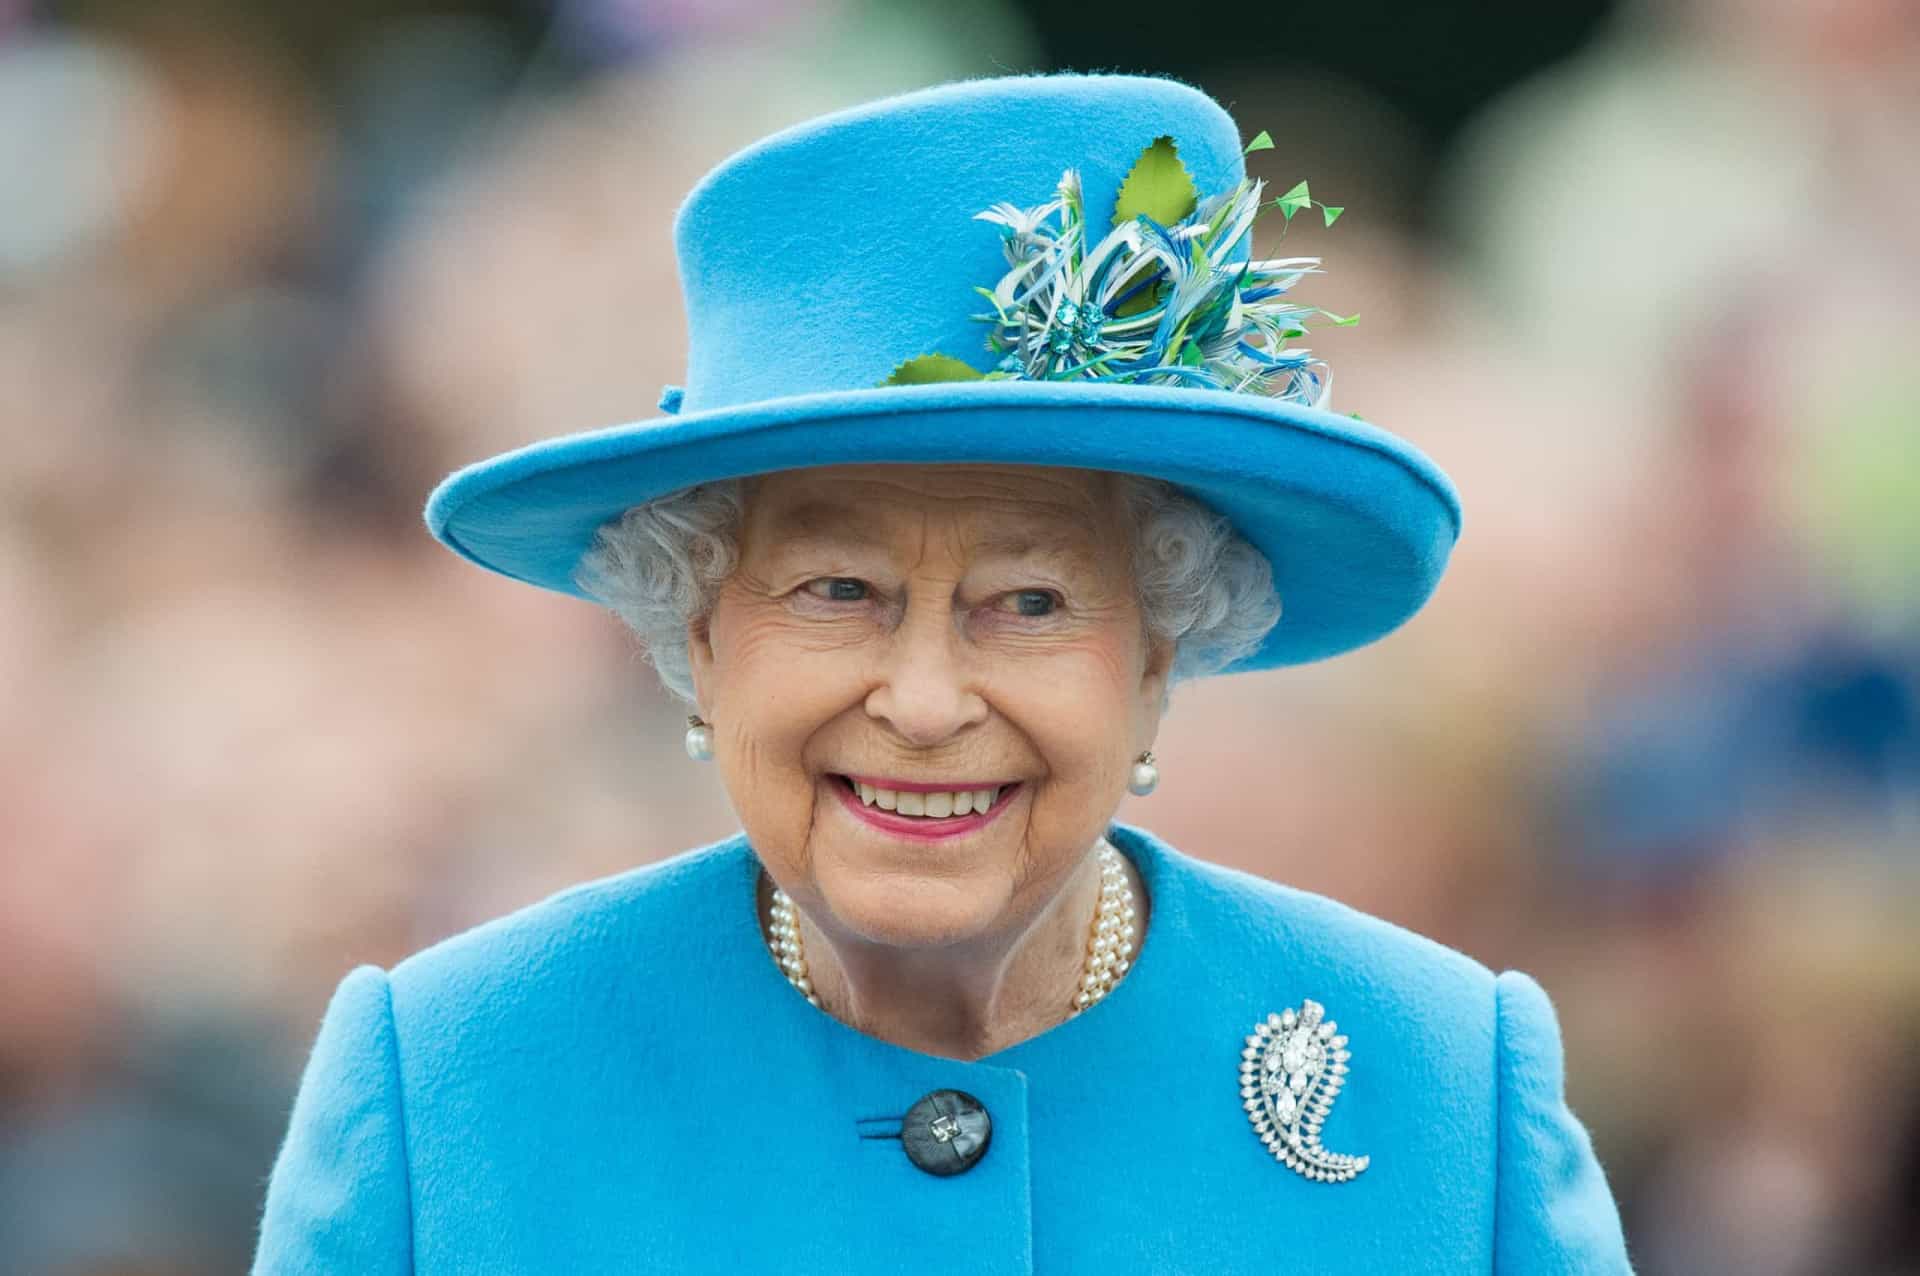 The most bizarre conspiracy theories about Queen Elizabeth II